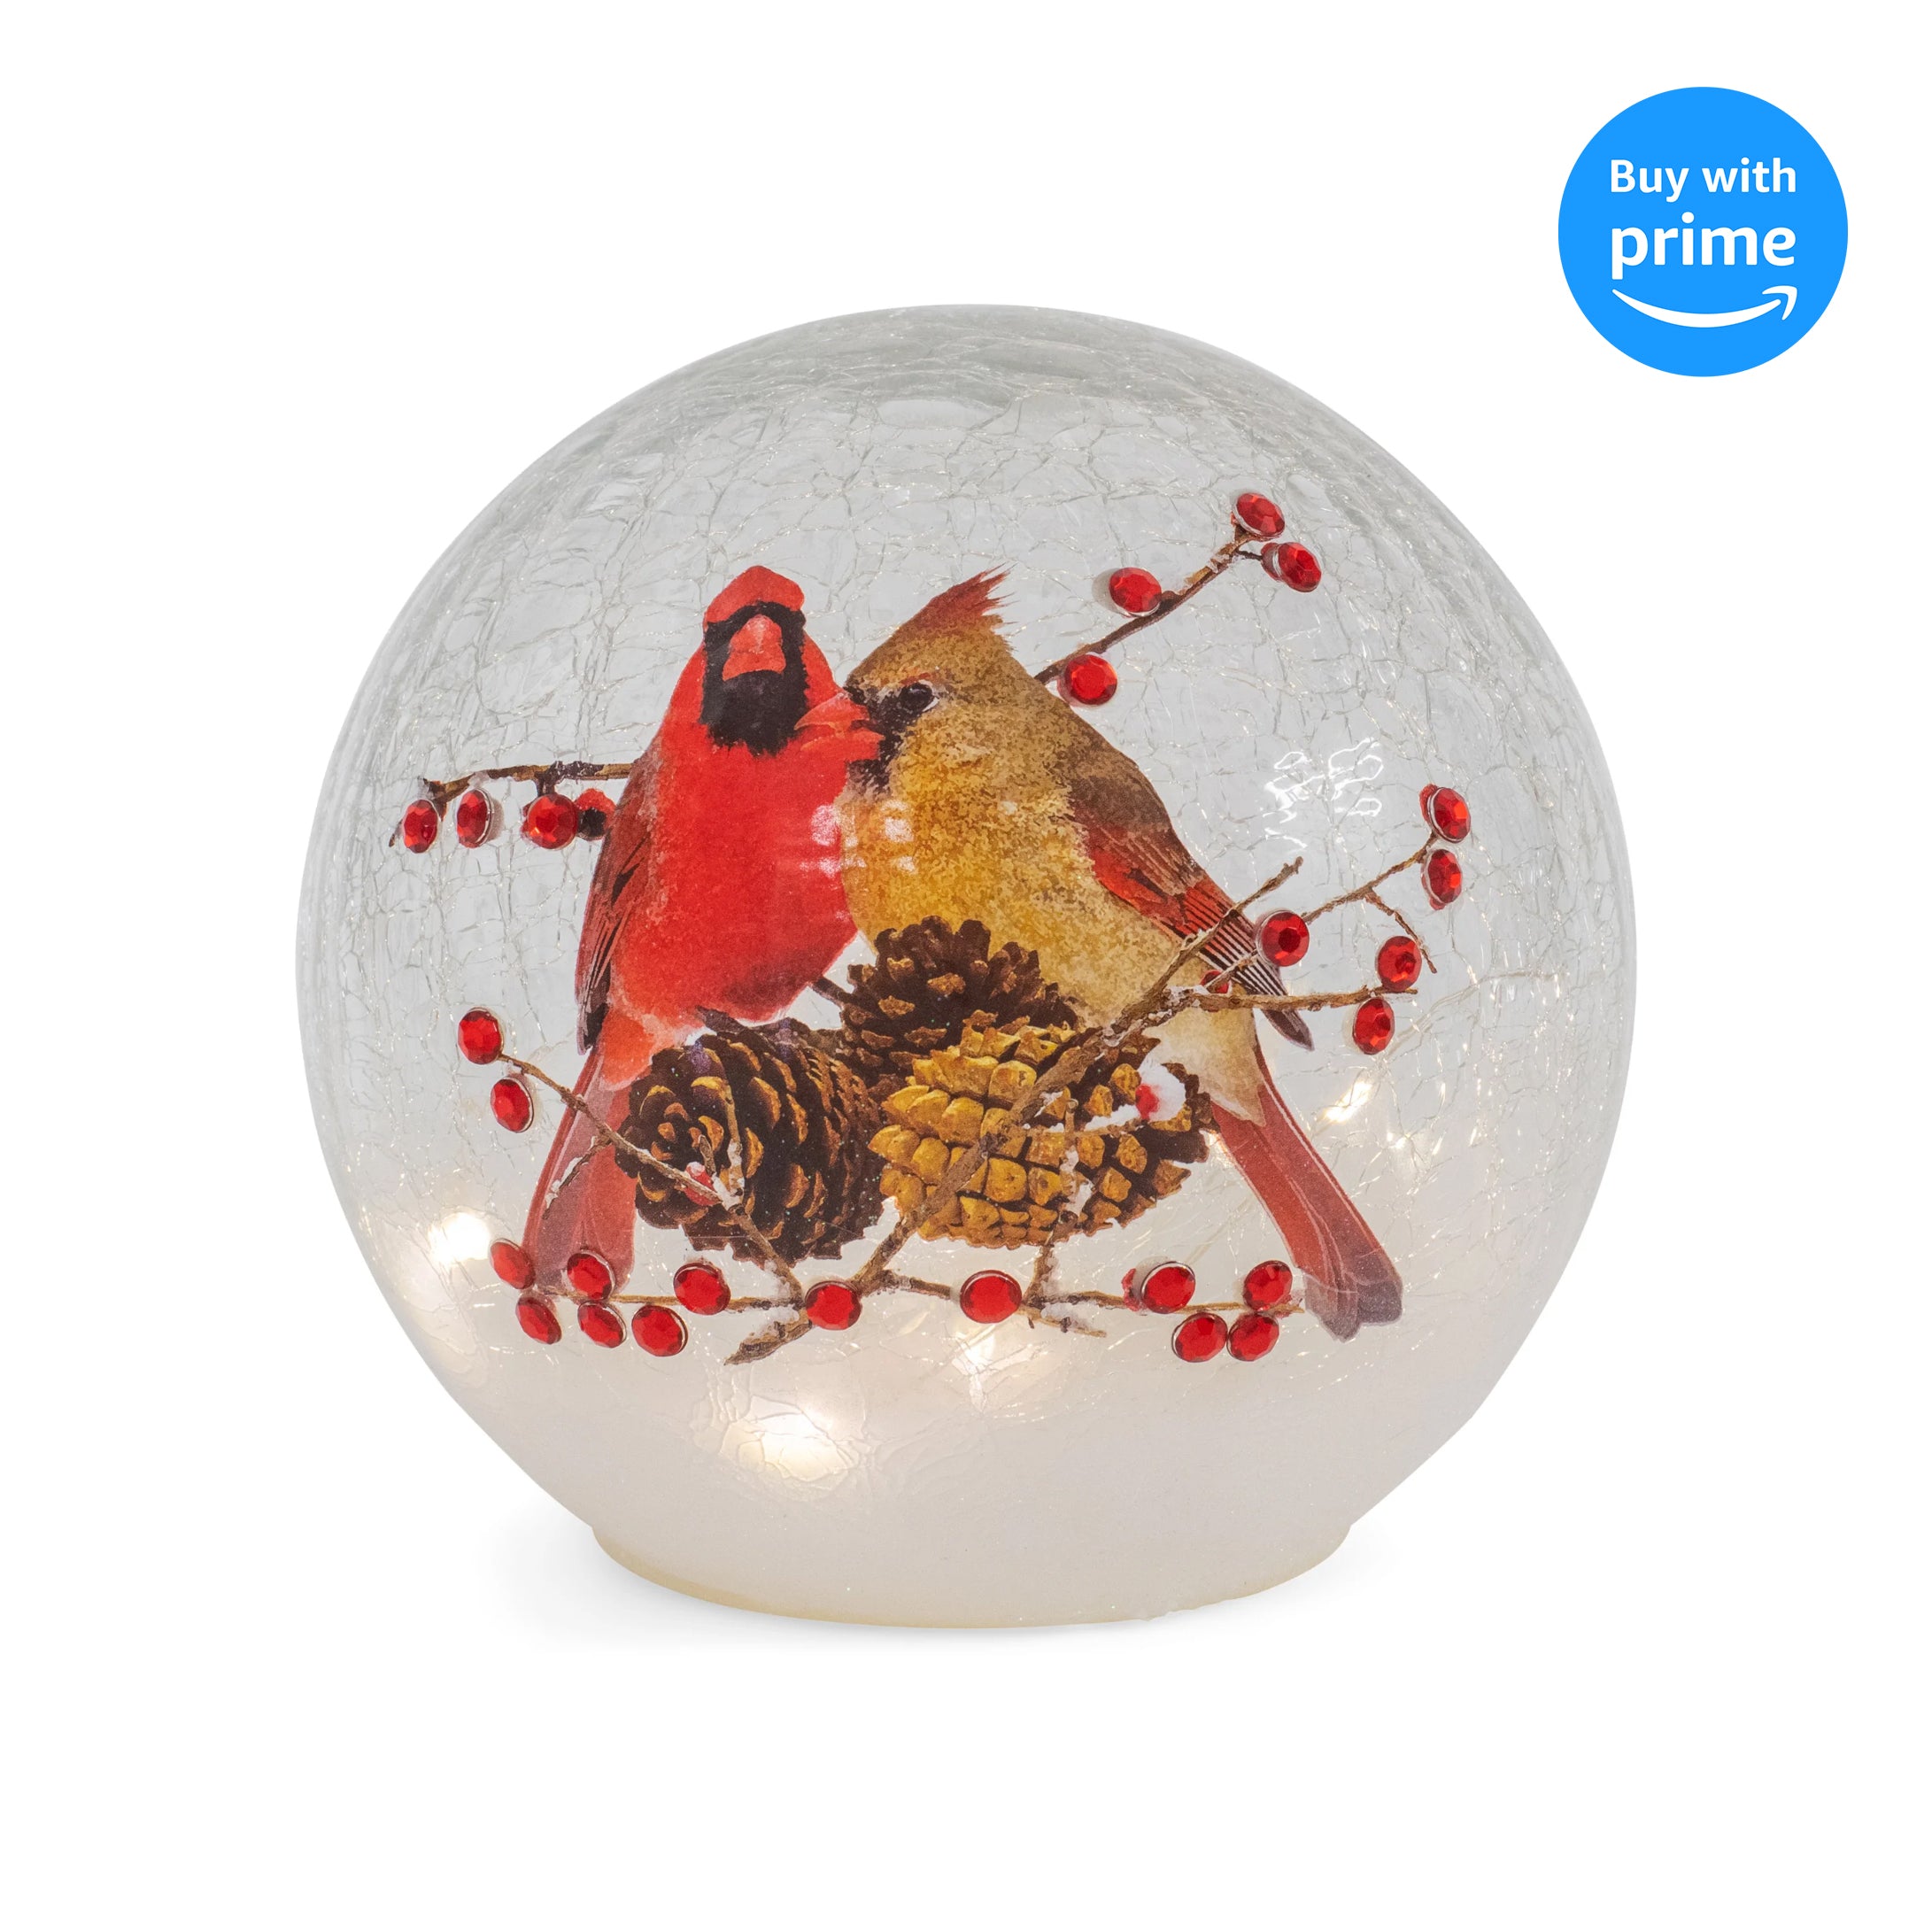 Demdaco Snow Globe - Lit Snowman & Cardinals